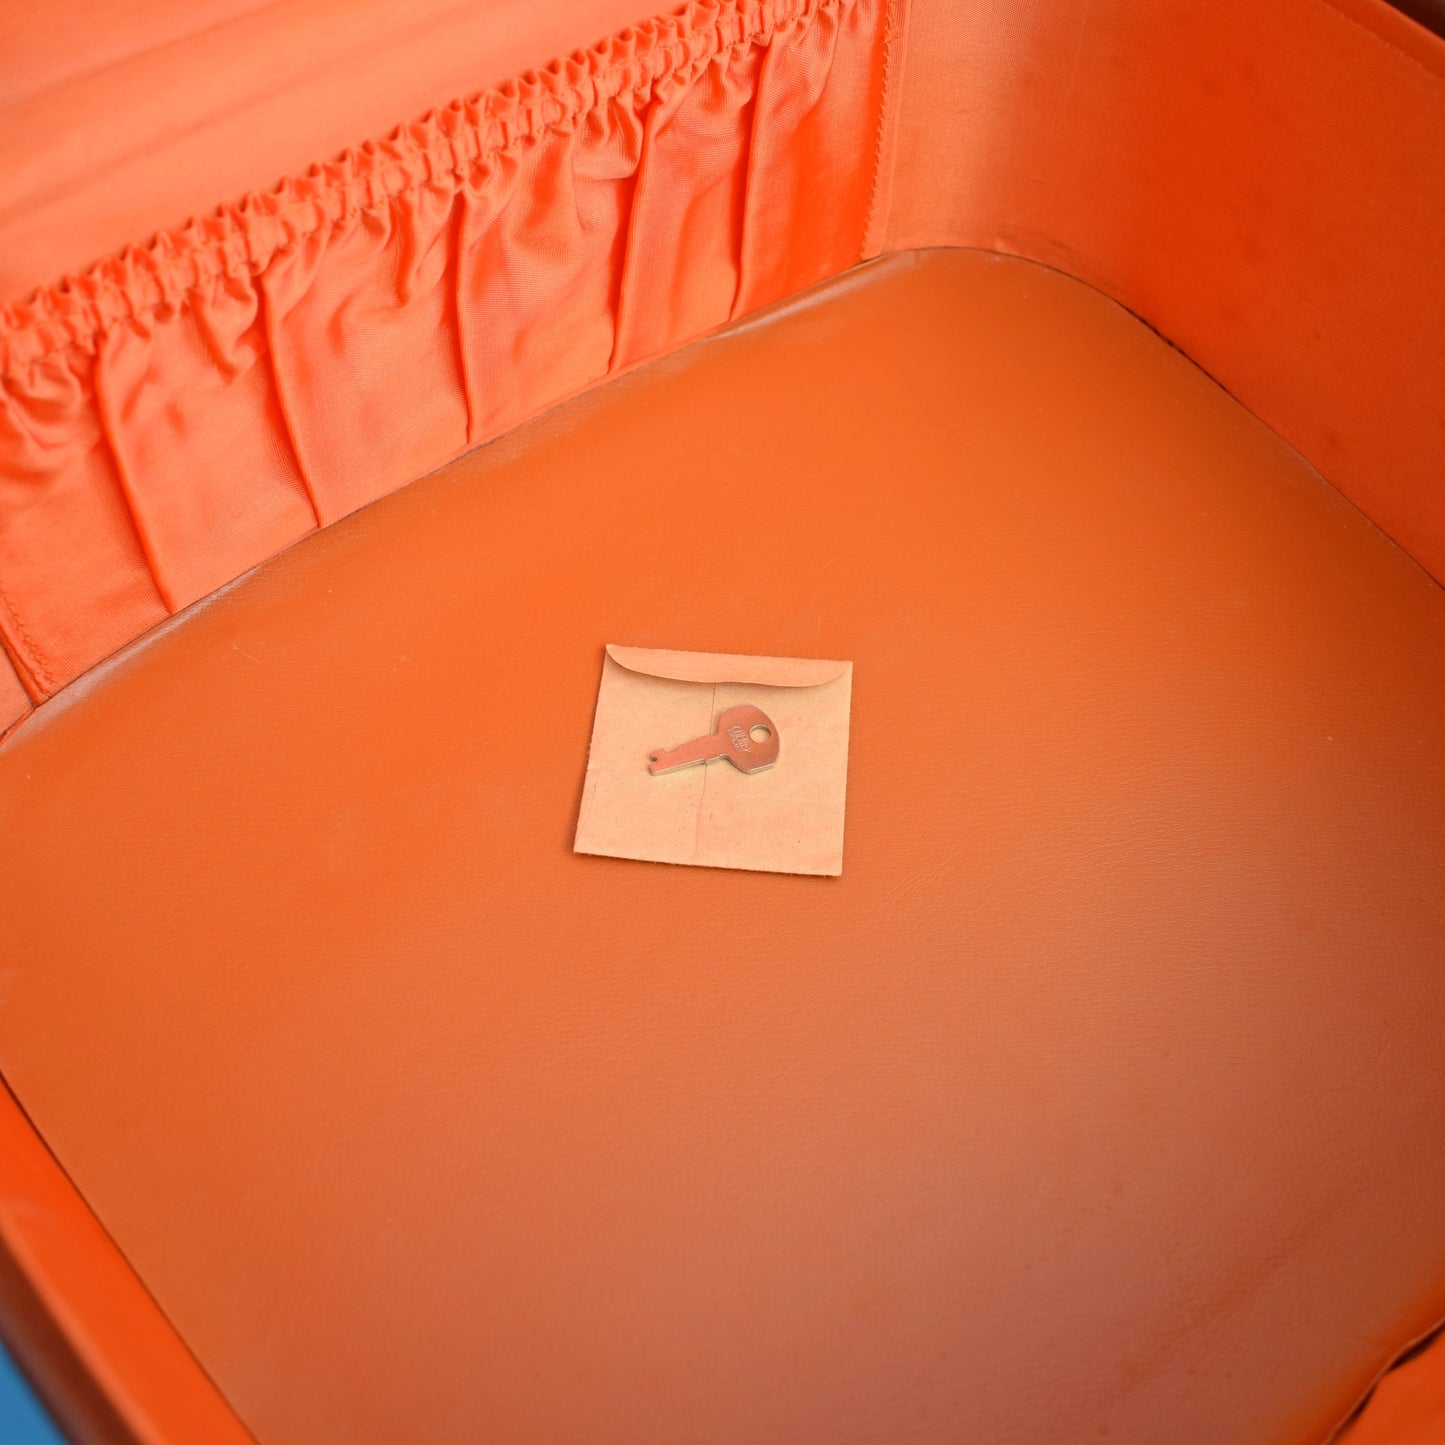 Vintage 1960s Suitcase - Brown/ Orange